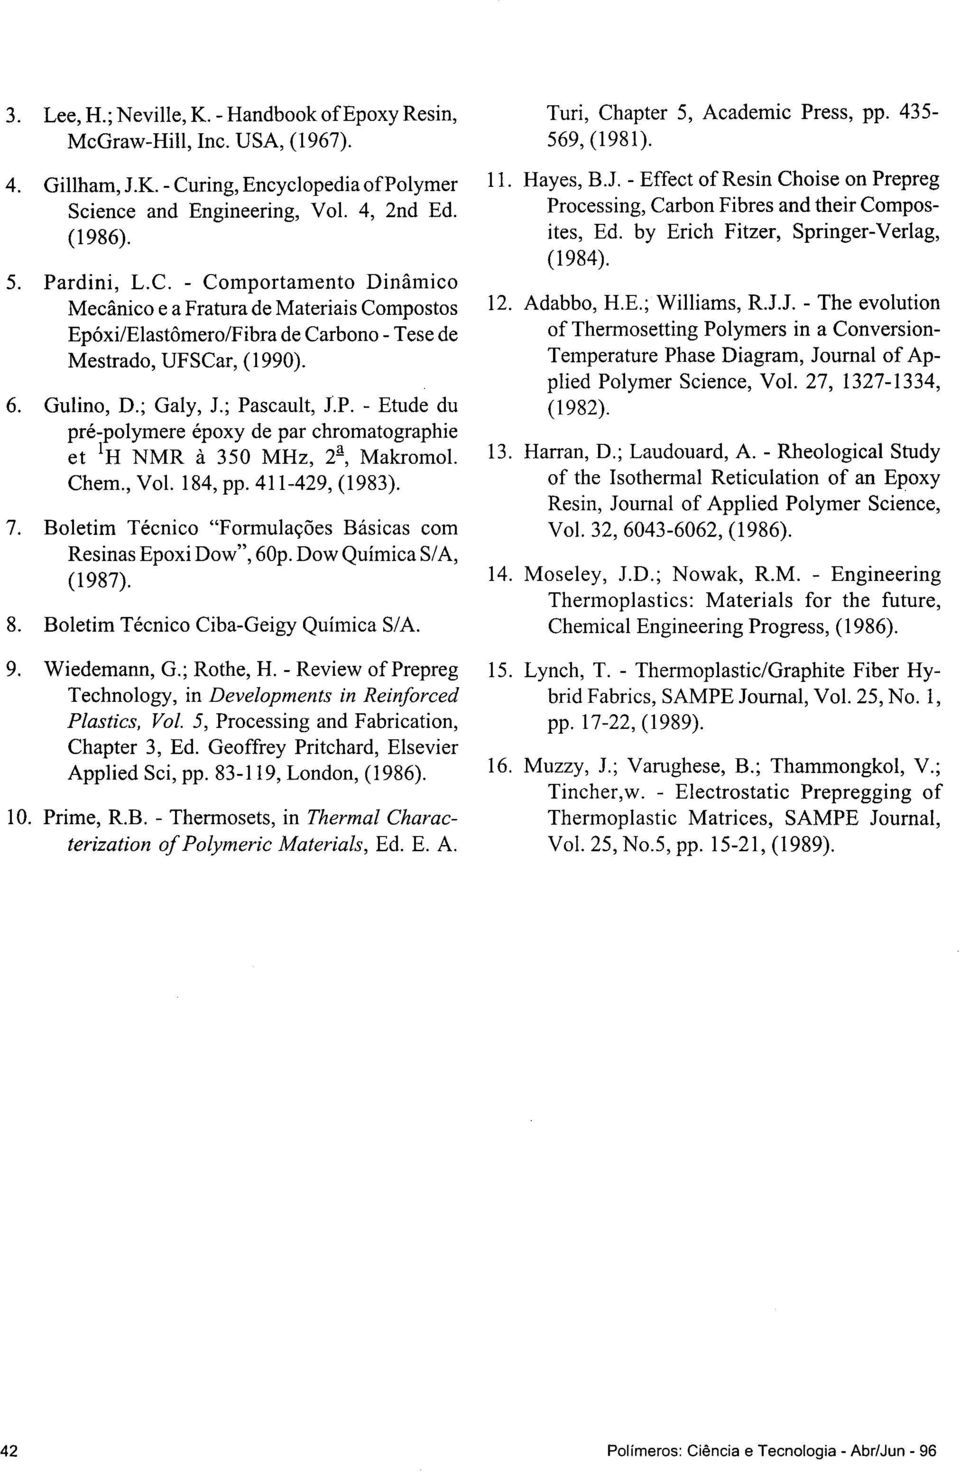 Adabb, H..; Williams, R.J.J. - The ev1utin póxi/1astômer/fibra de Carbn - Tese de f Thermsetting P1ymers in a Cnversin- Mestrad, UFSCar, (1990).